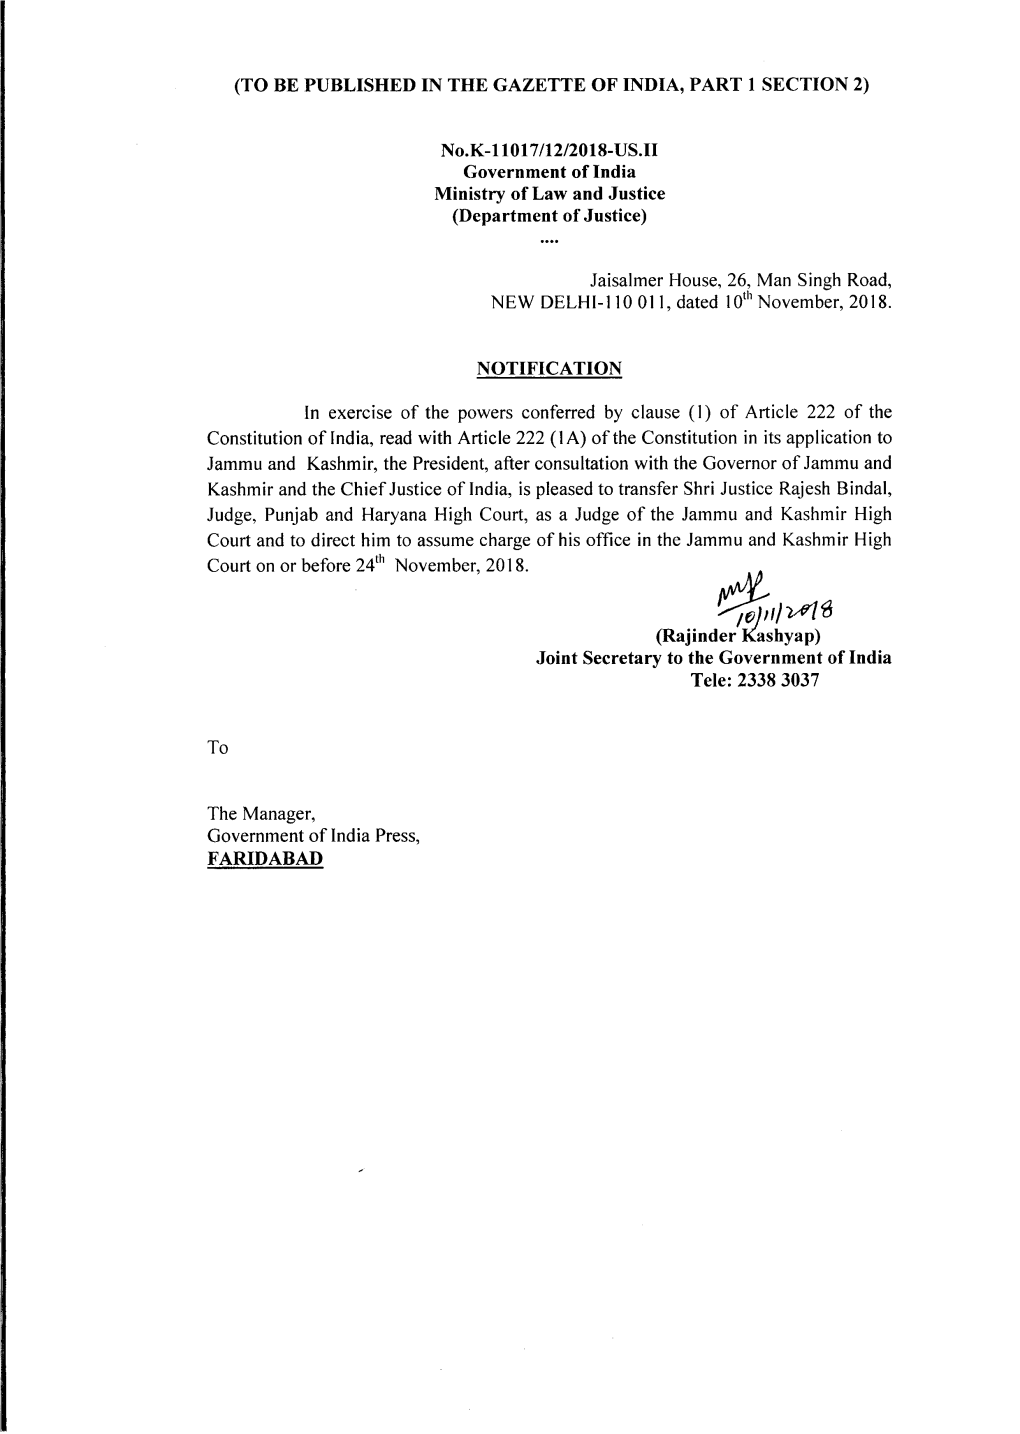 Transfer of Shri Justice Rajesh Bindal, Judge, P& H HC to J&K HC